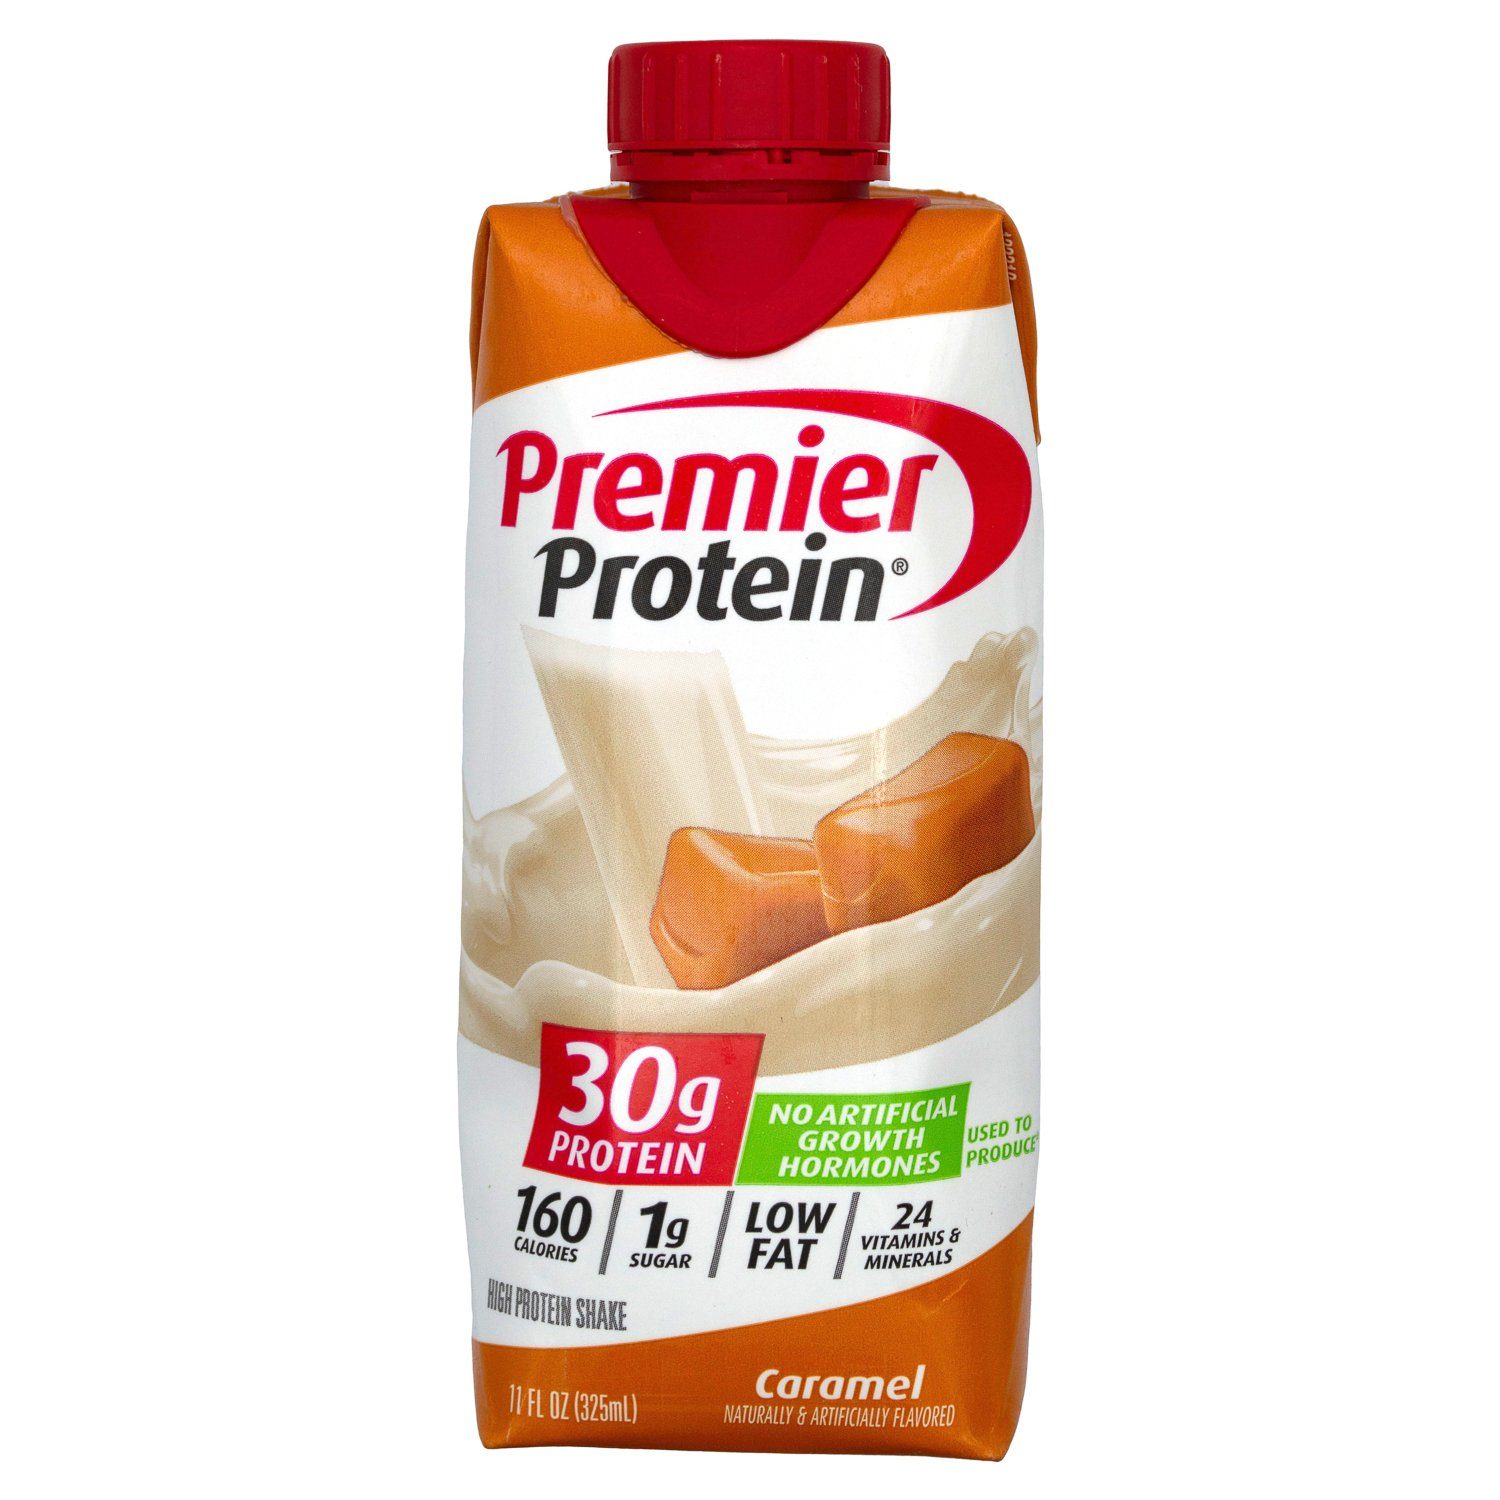 Premier Protein Shake Premier Protein Caramel 11 Fluid Ounce 